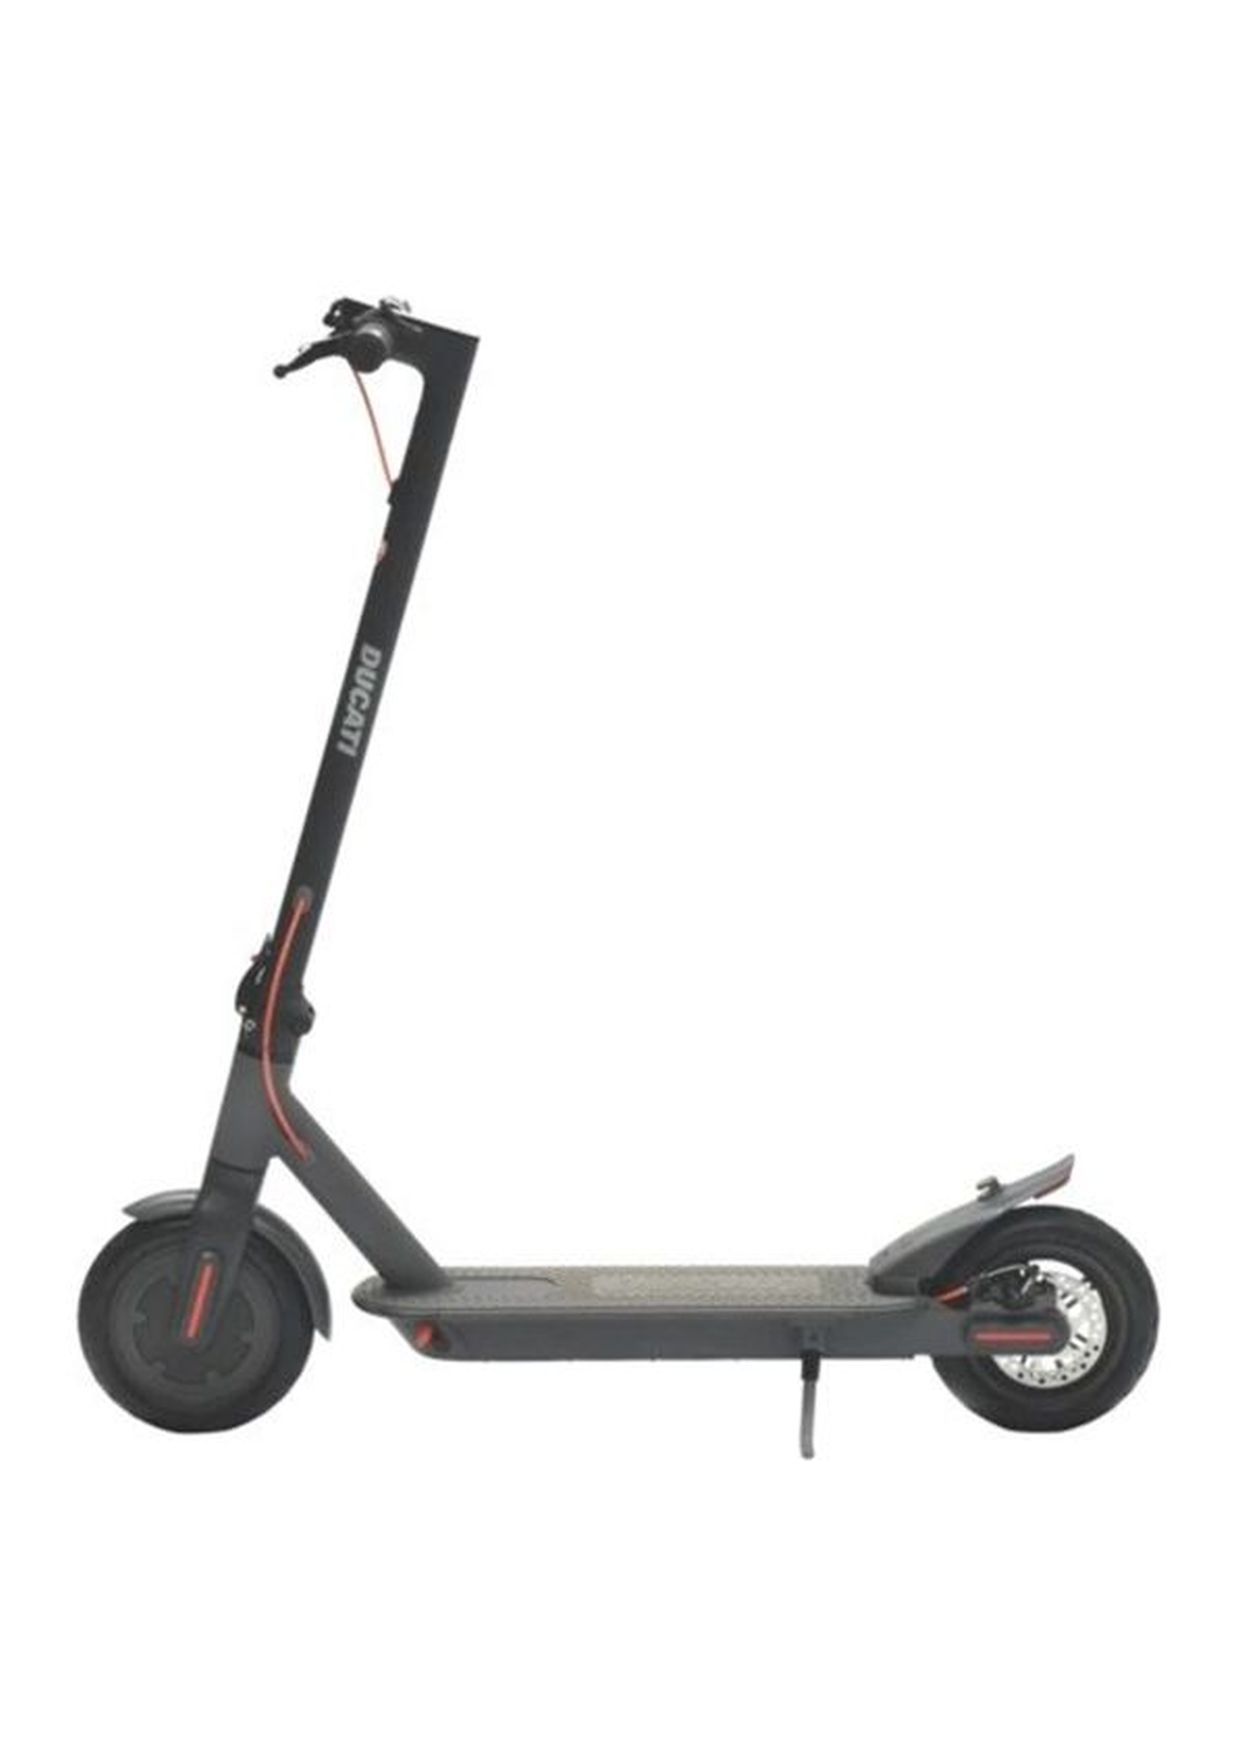 New product alert - Ducati PRO-I Evo eScooter